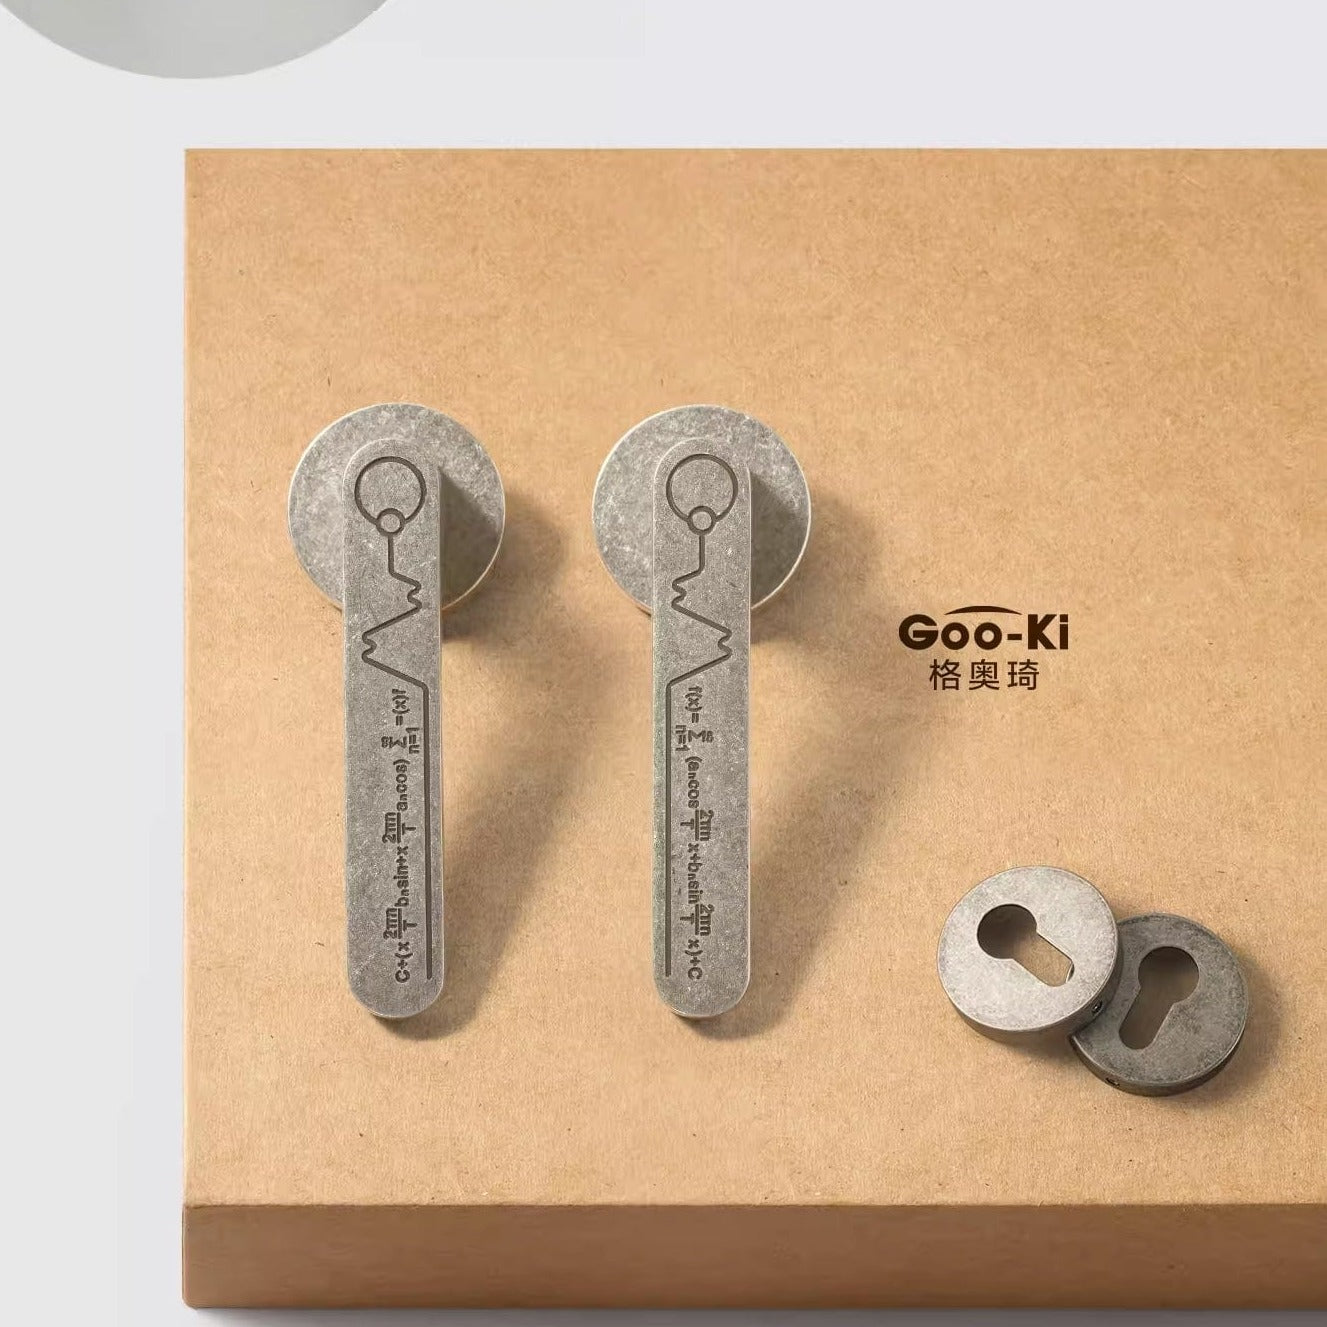 Goo-Ki Antique Silver / With Keys Creative Design Security Door Lock Fourier Formula Silent Antique Door Lever for Children's Room